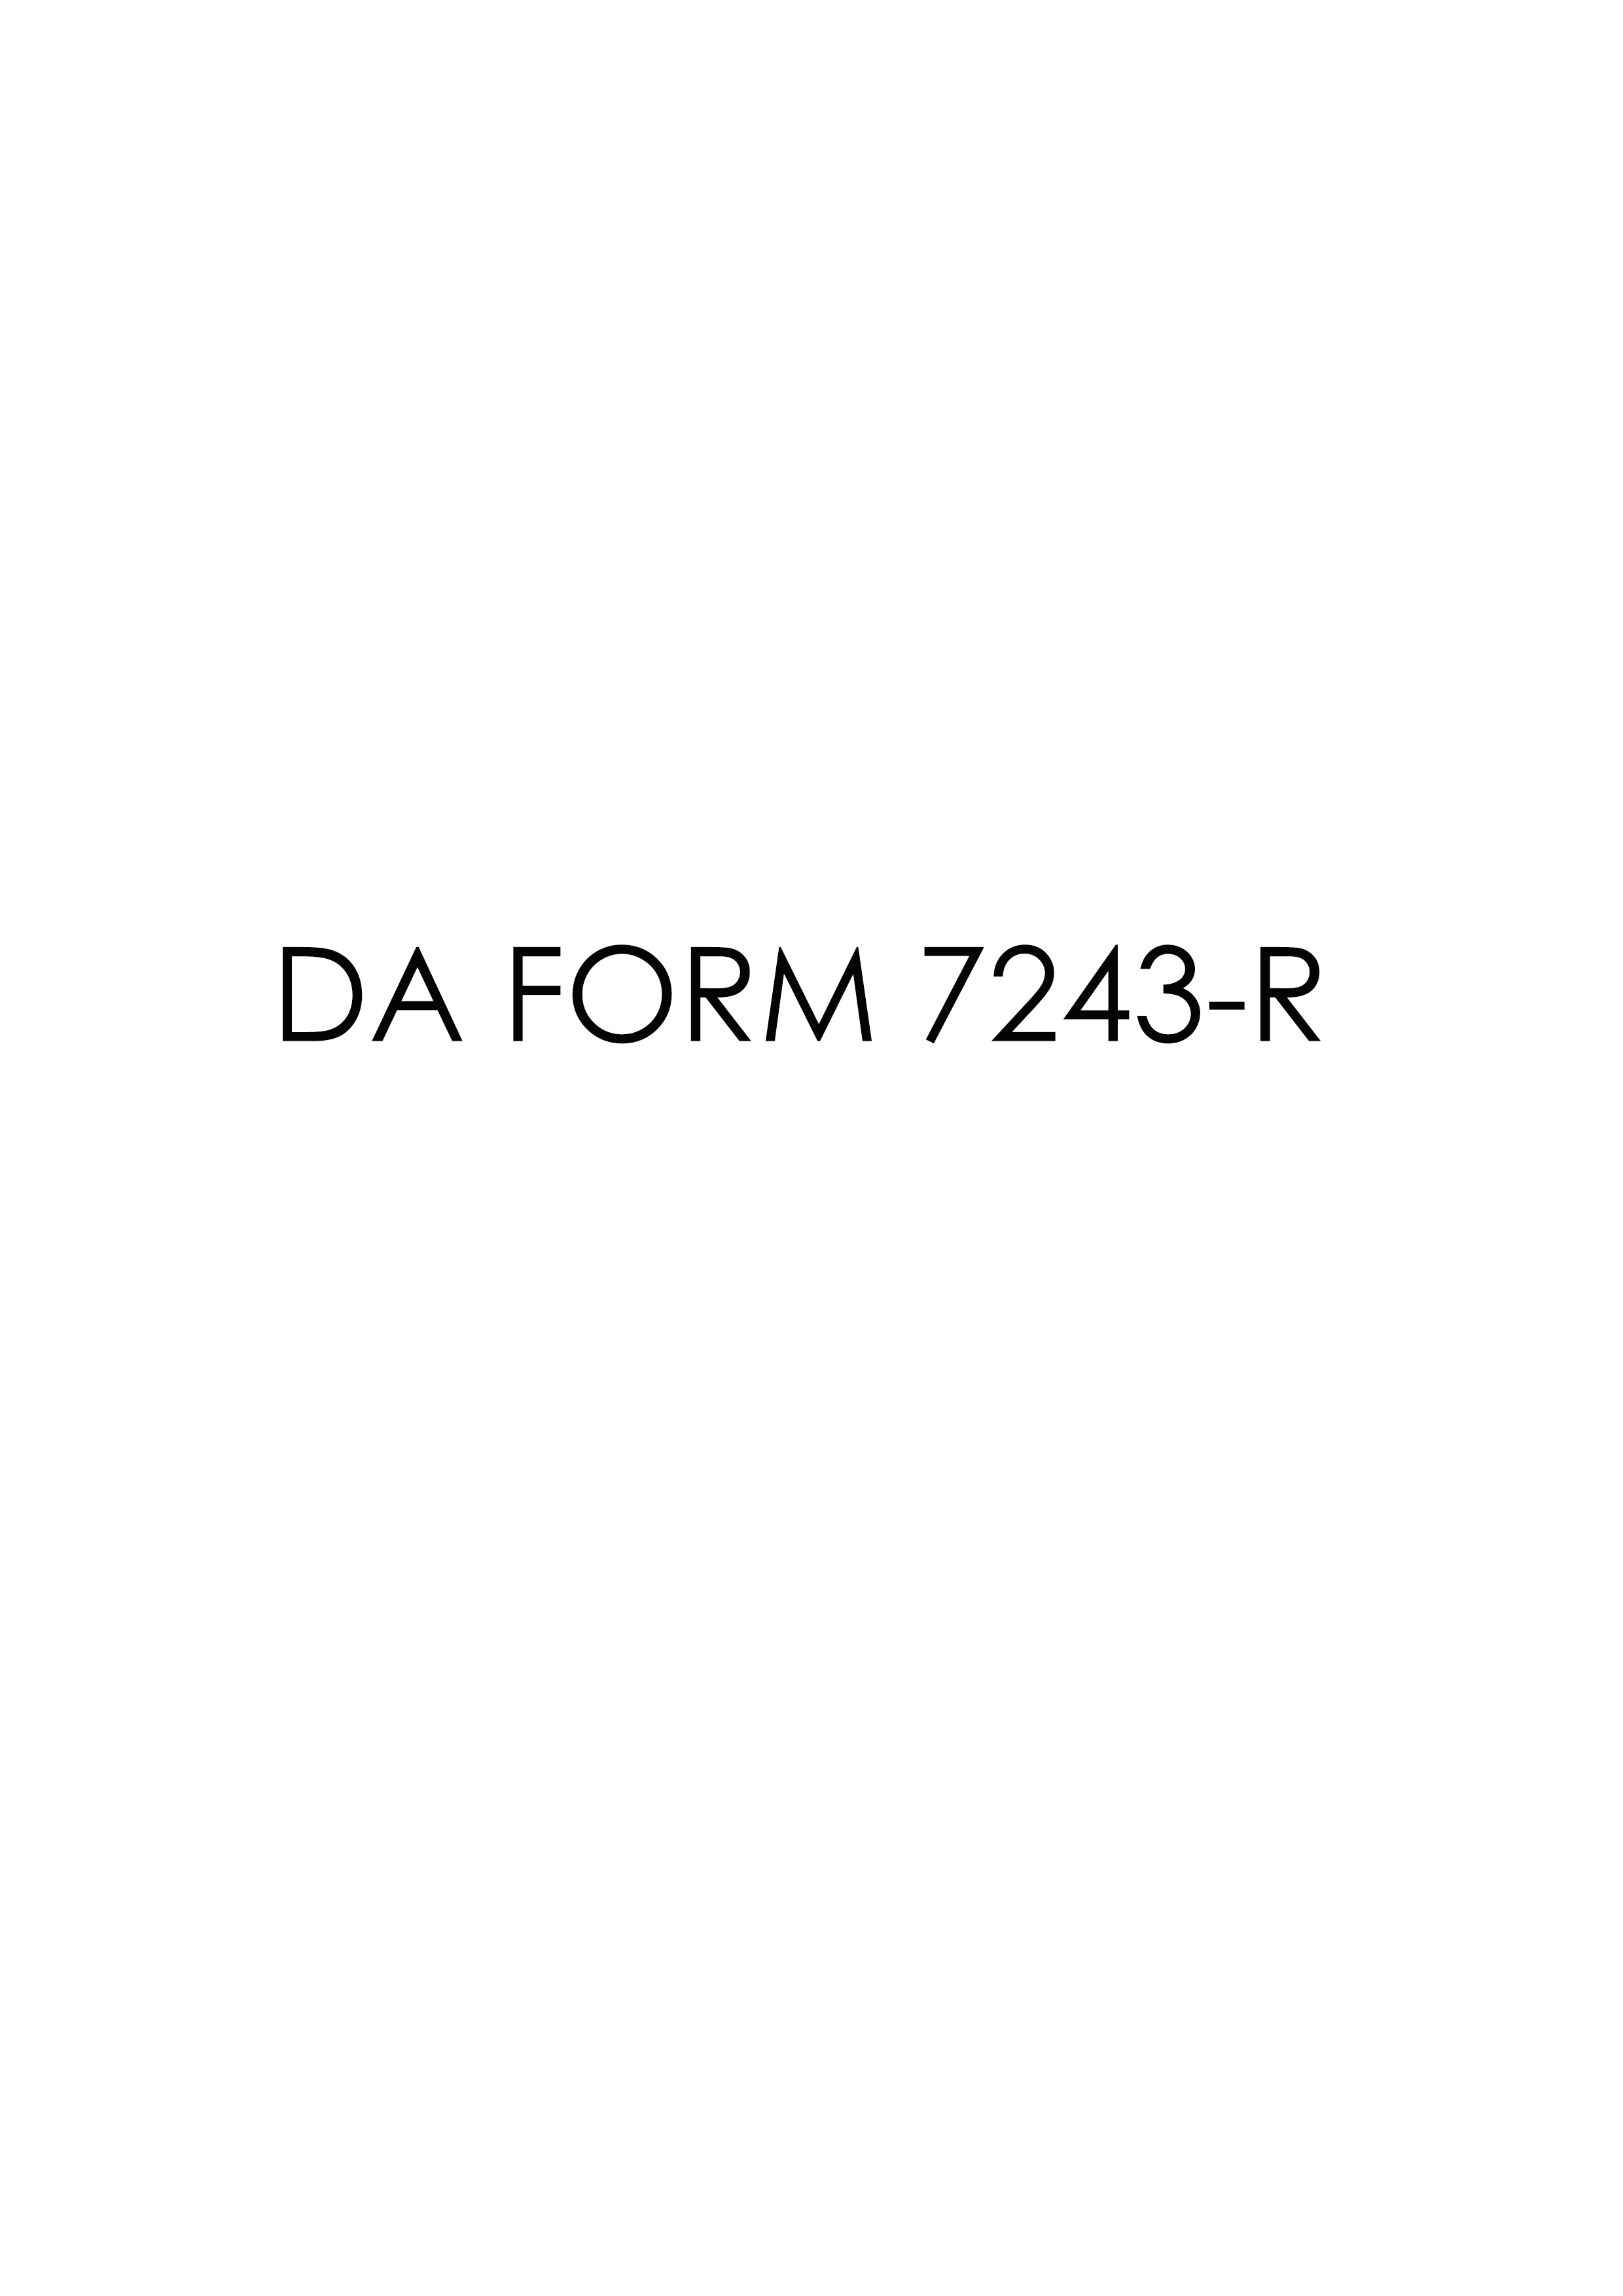 da Form 7243-R fillable